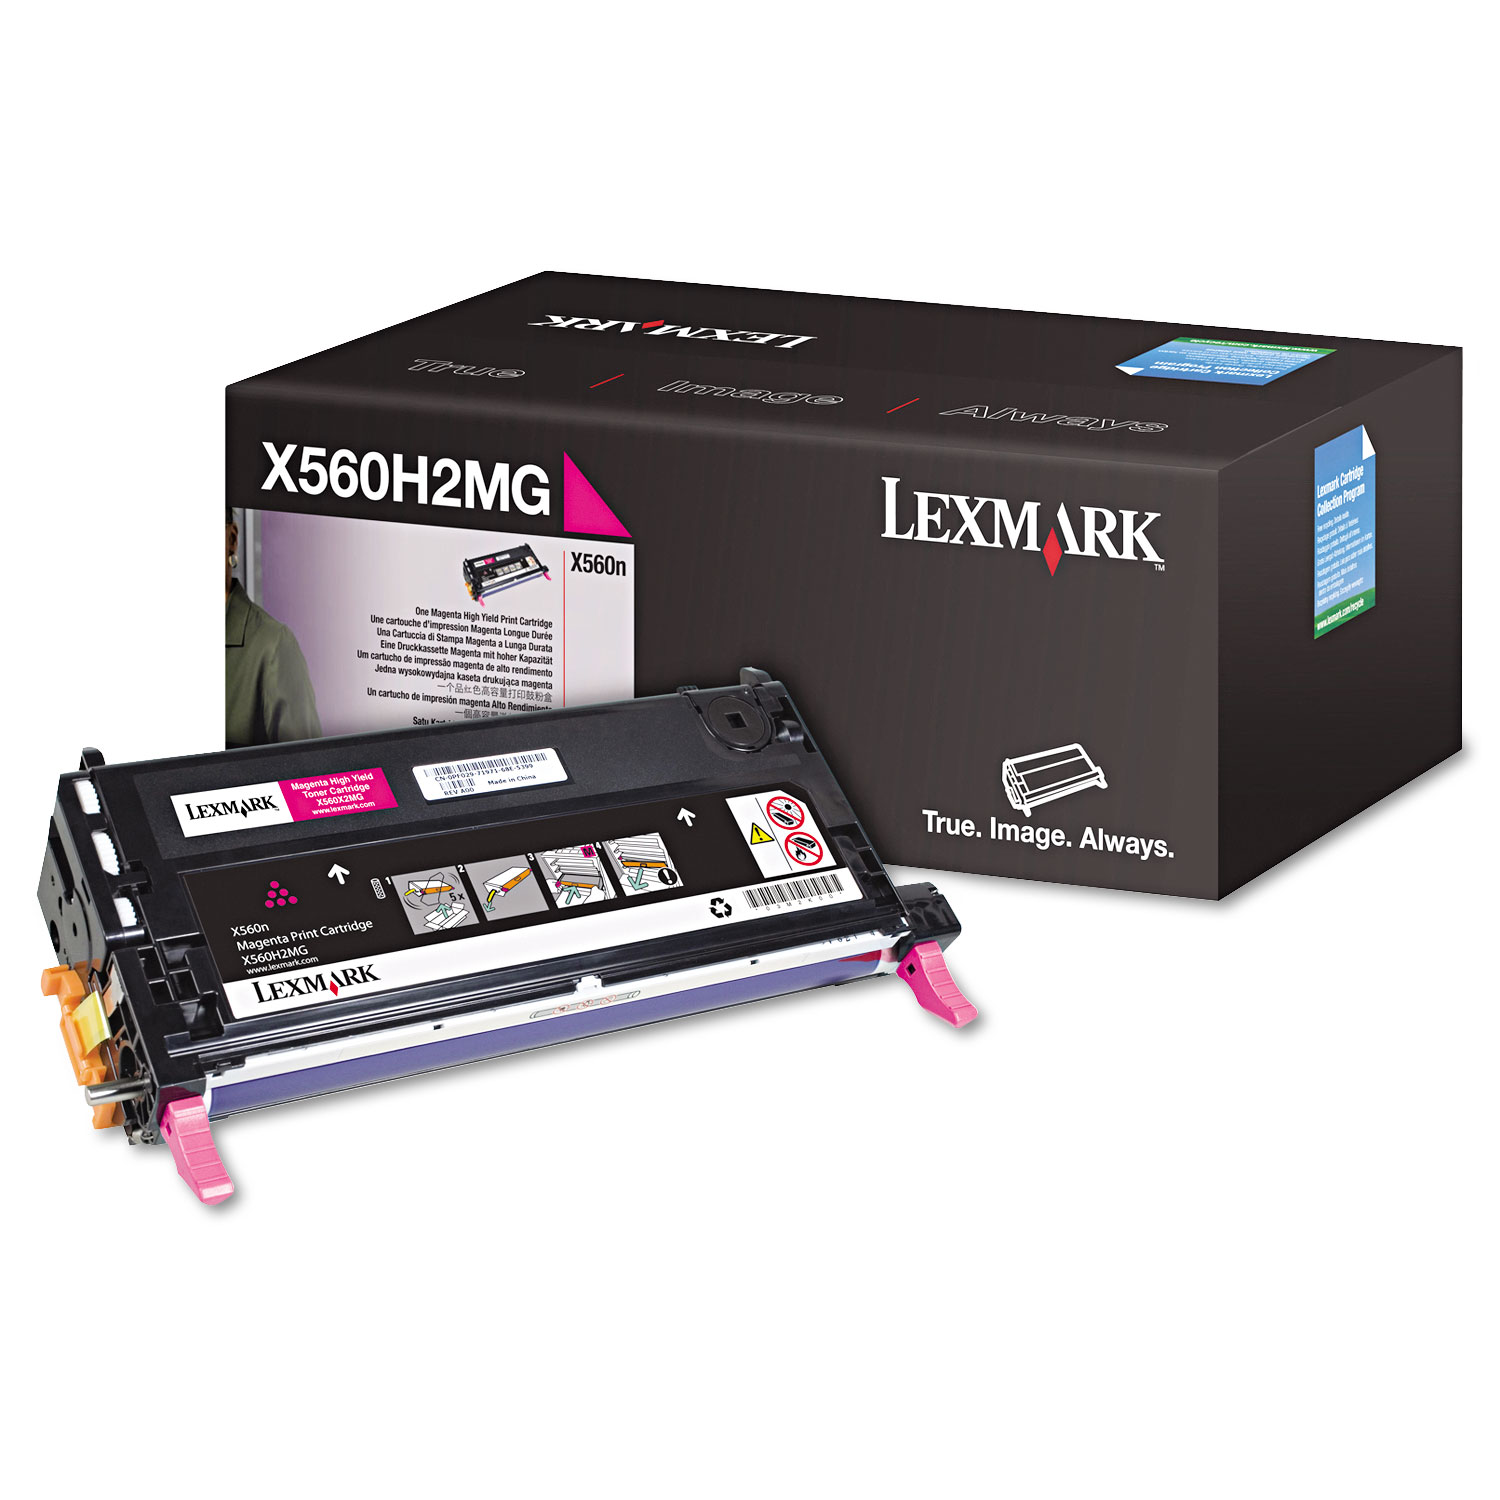  Lexmark X560H2MG X560H2MG High-Yield Toner, 10000 Page-Yield, Magenta (LEXX560H2MG) 